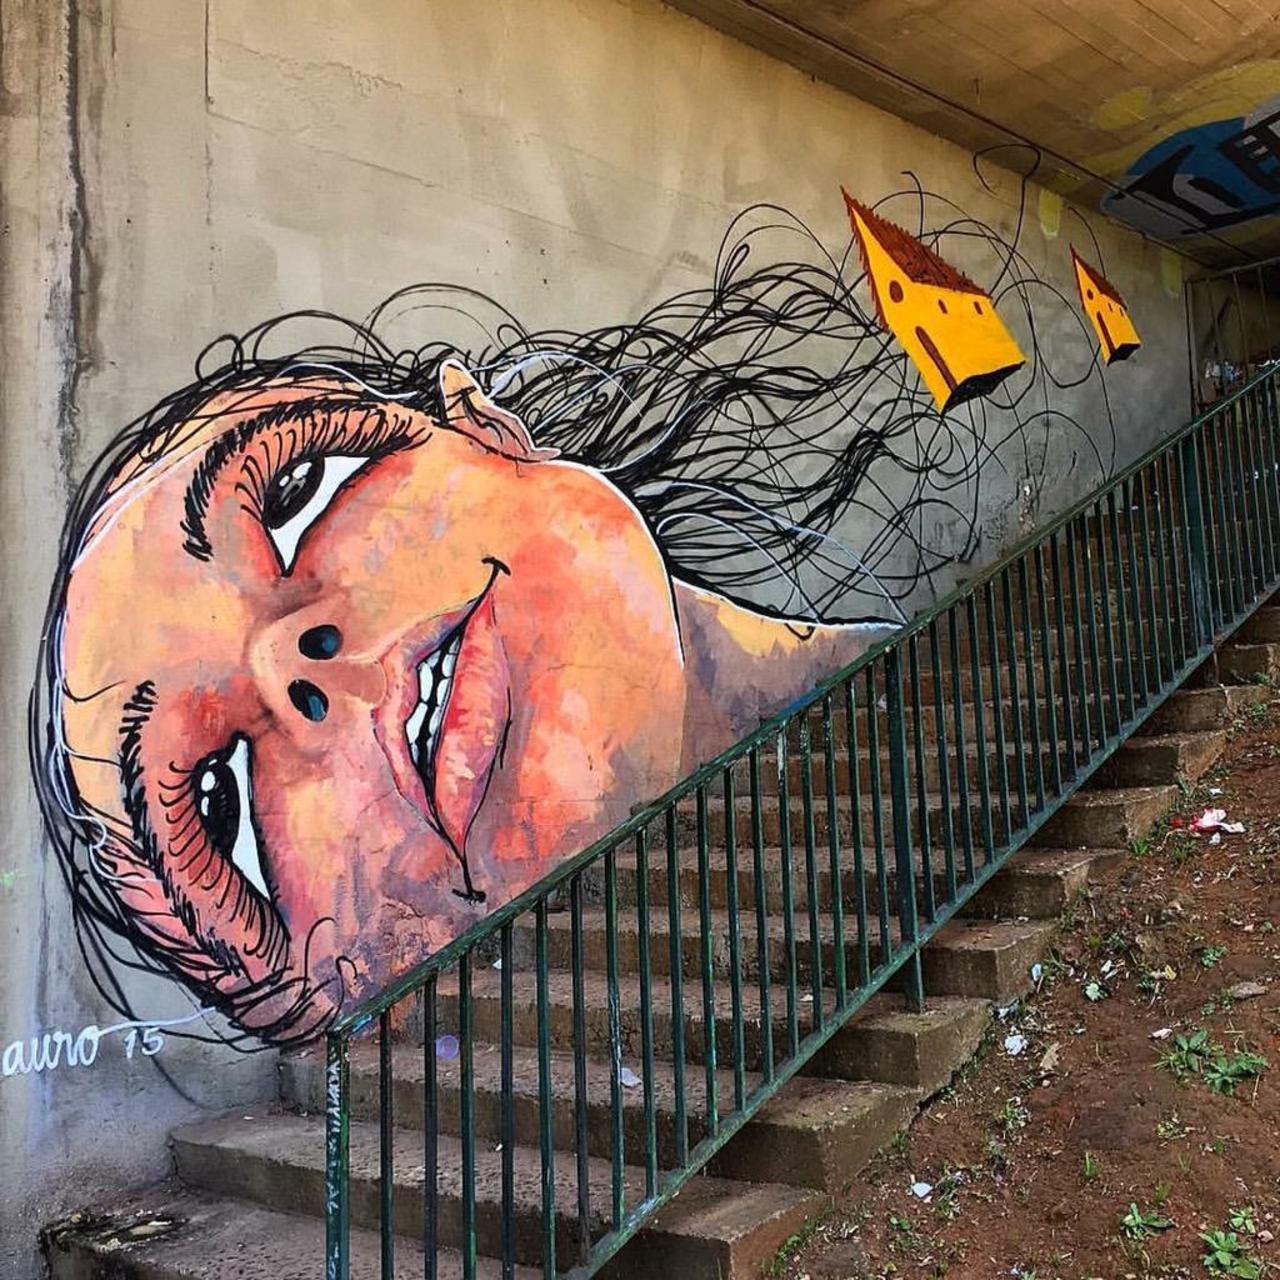 Street Art by Reveracidade in São Paulo 

#art #graffiti #mural #streetart http://t.co/QaWeIXvELB